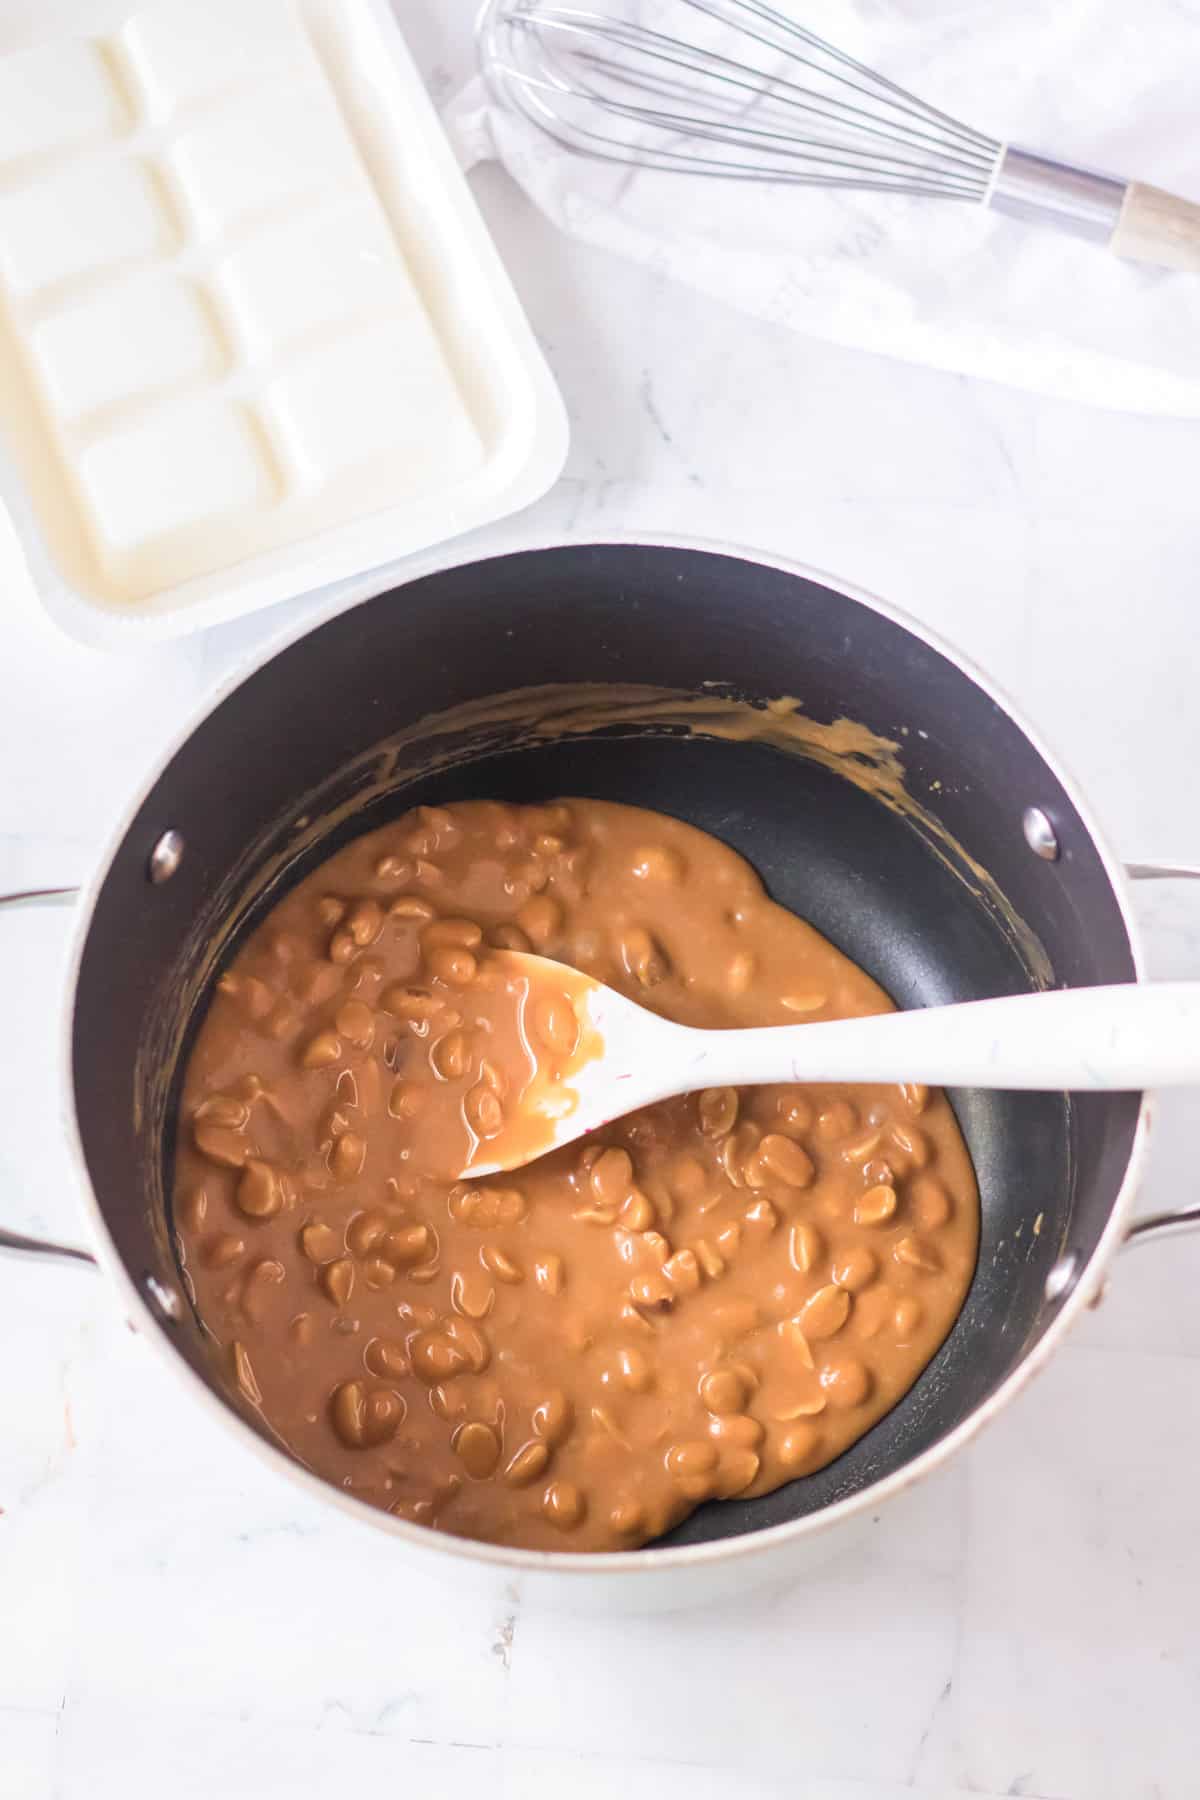 Caramel peanut mixture in saucepan with wooden spoon.